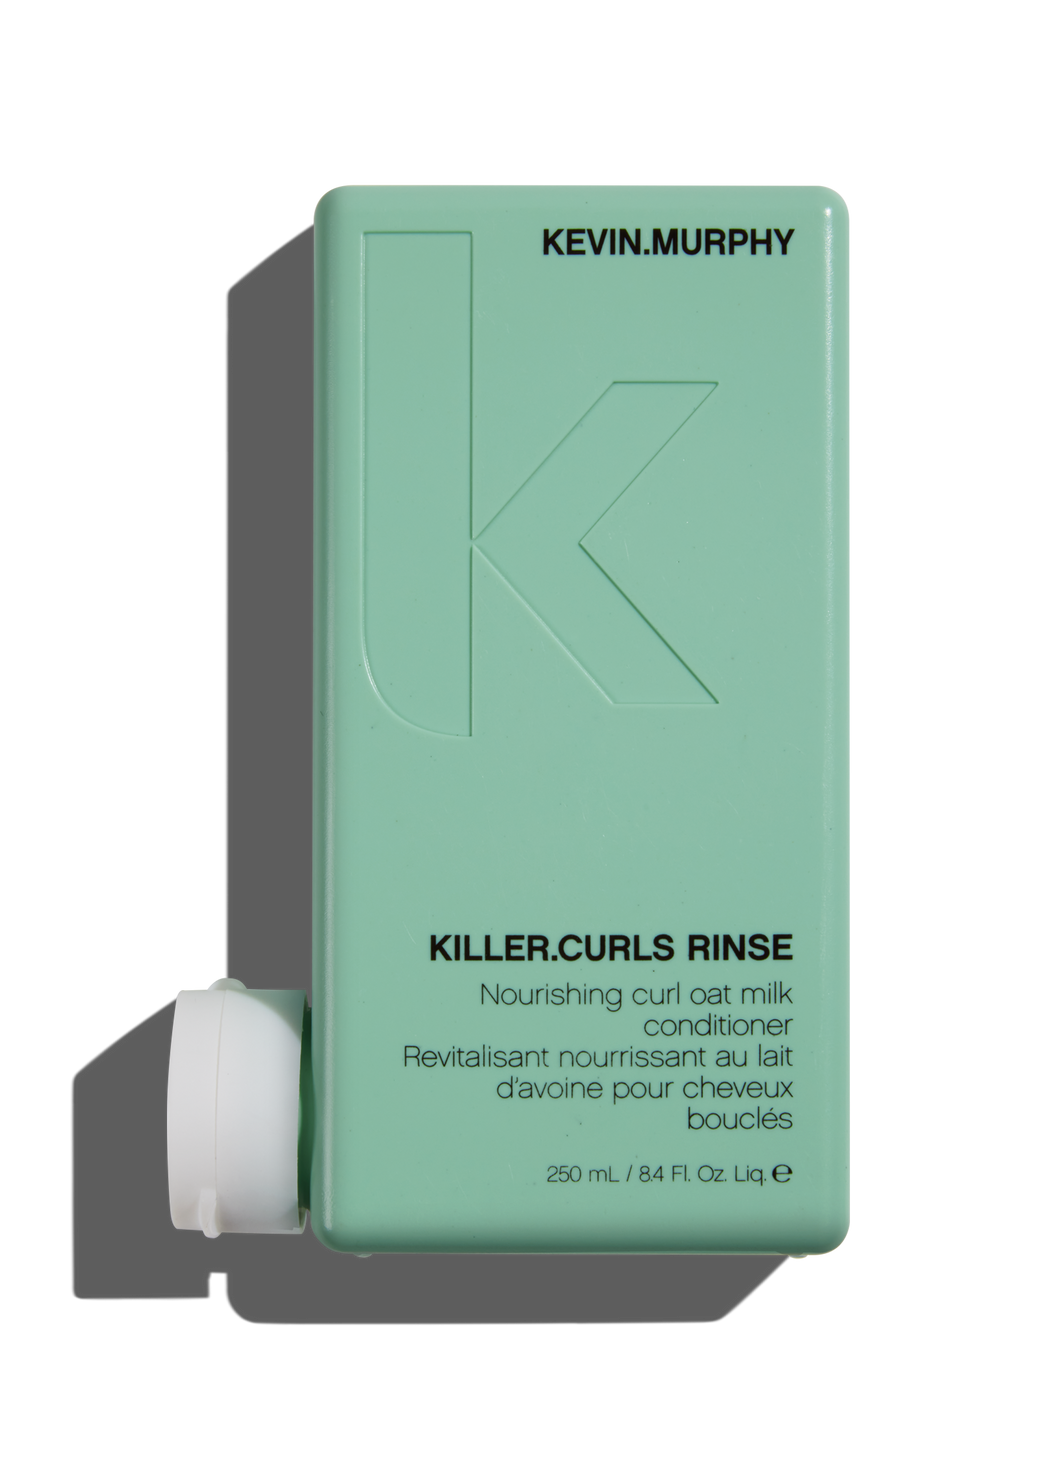 KEVIN.MURPHY- Killer.Curls Rinse